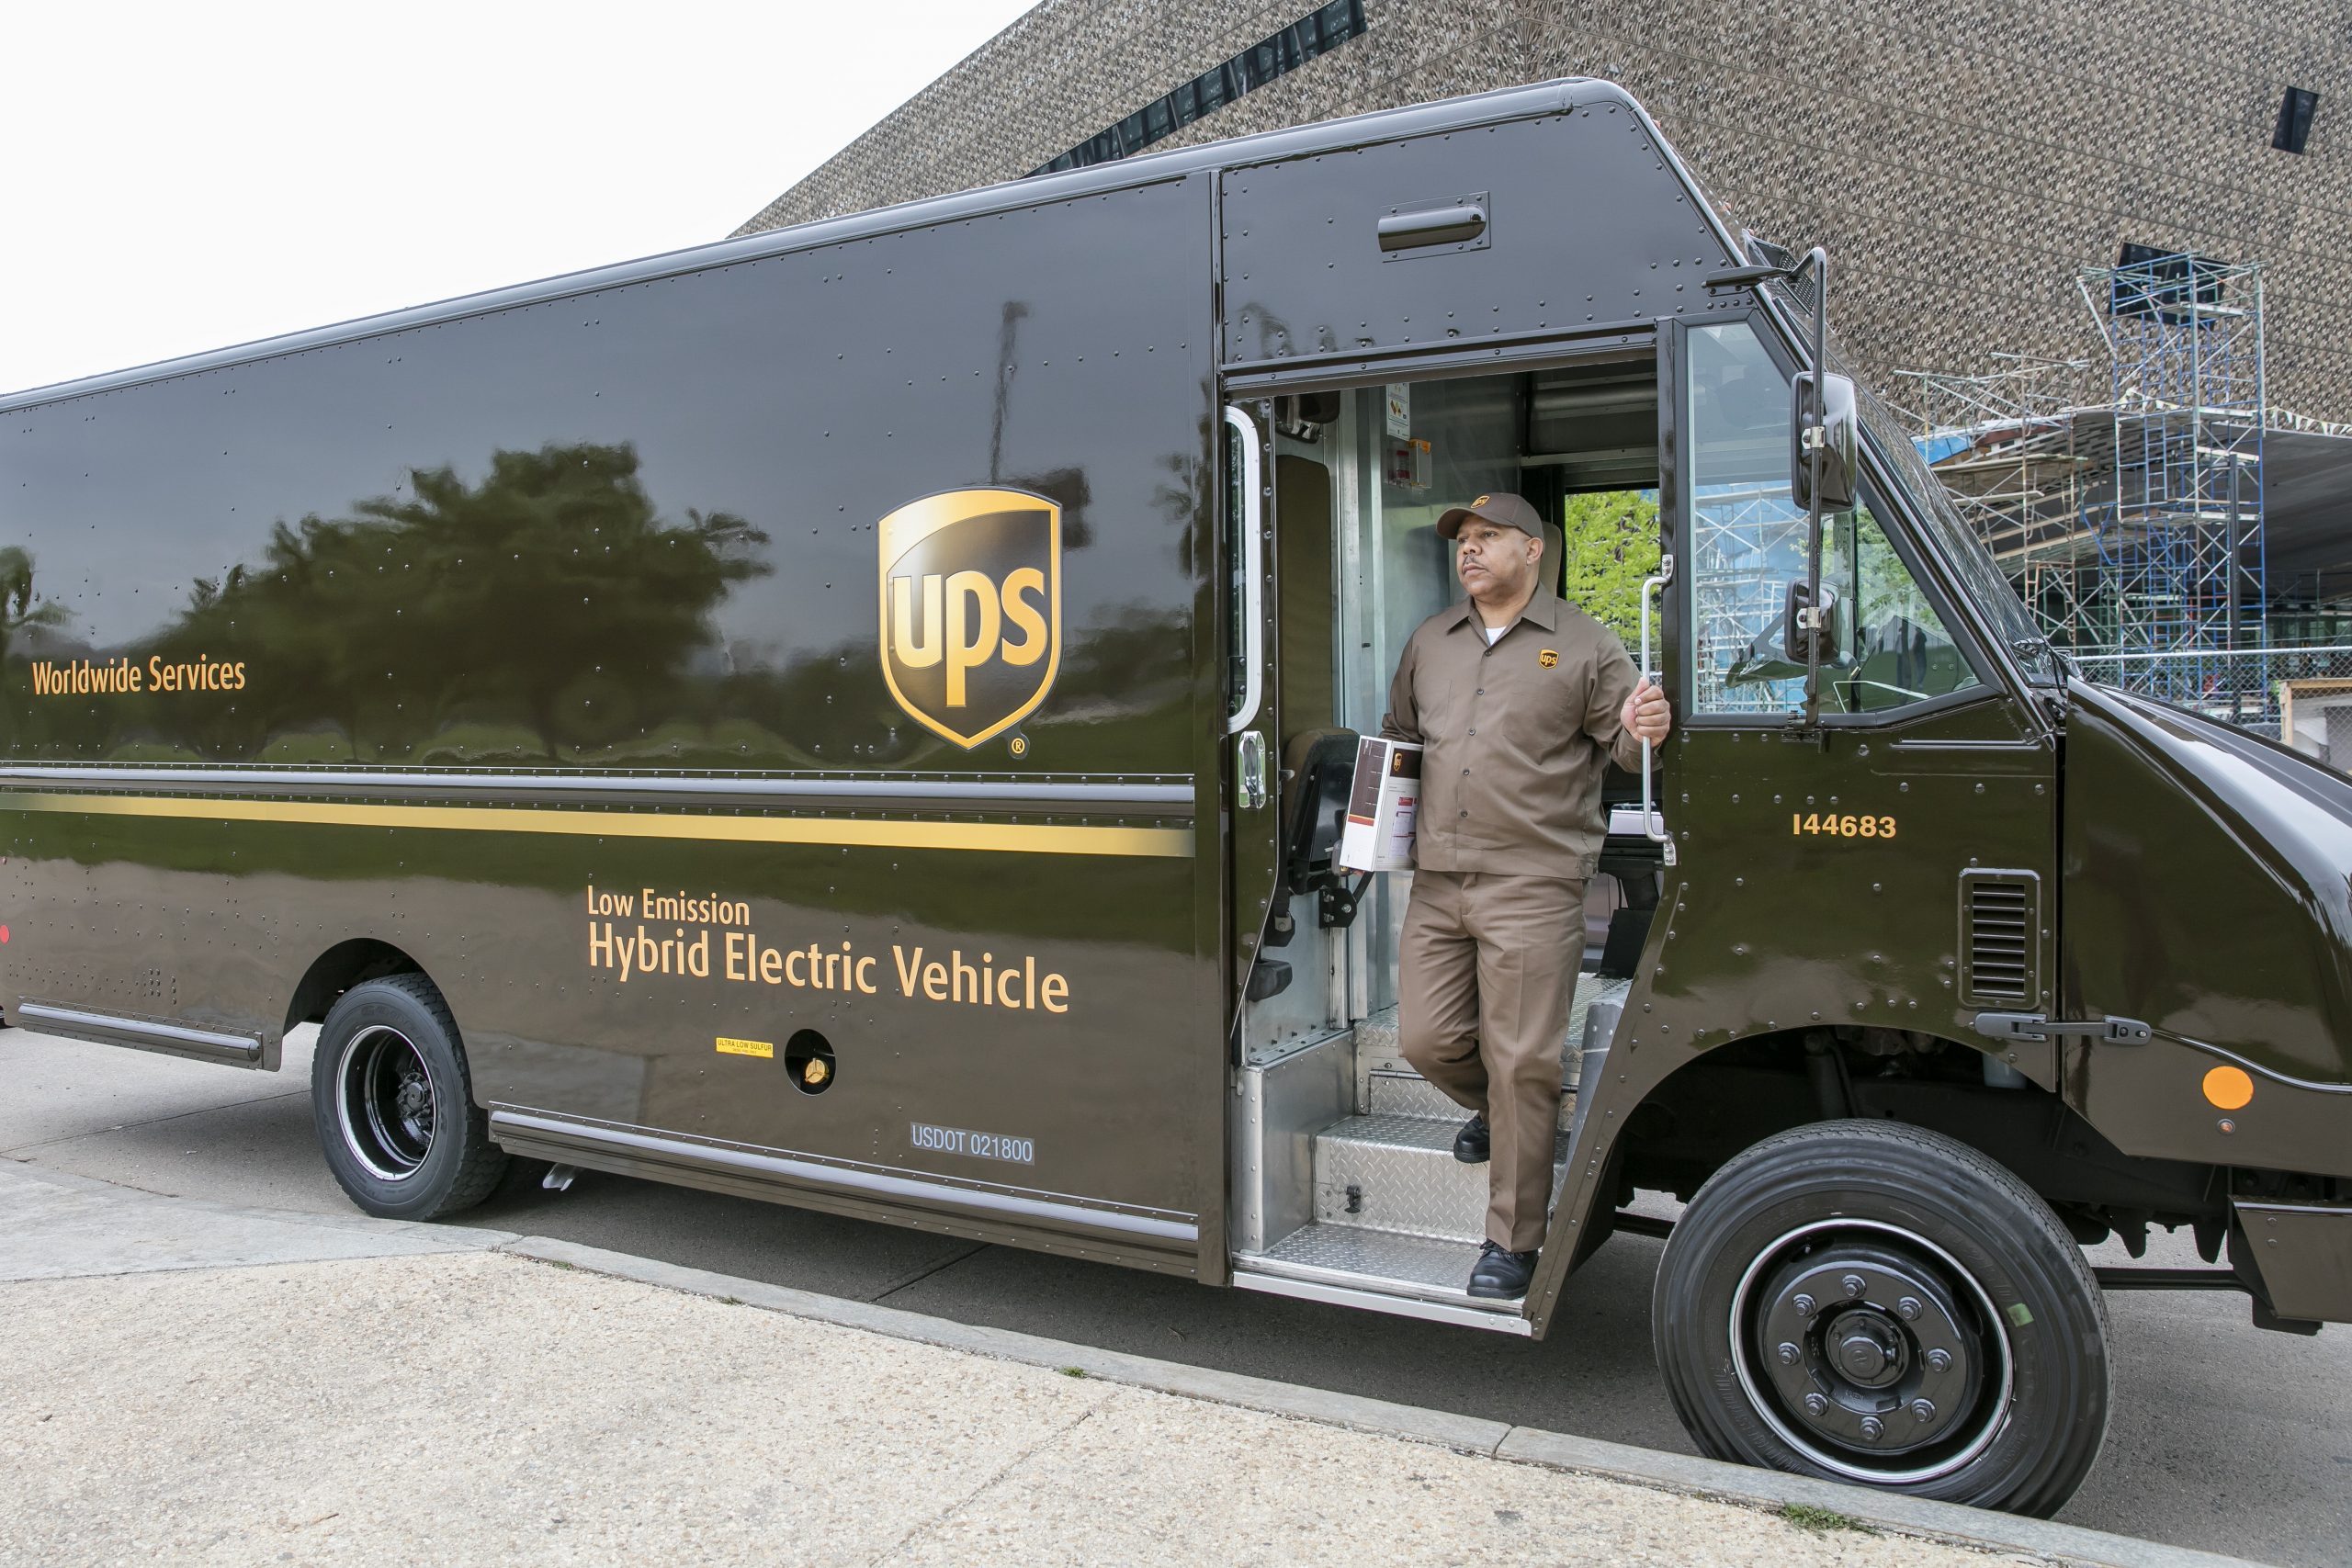 UPS clocks up 1bn “cleaner” miles ahead of schedule